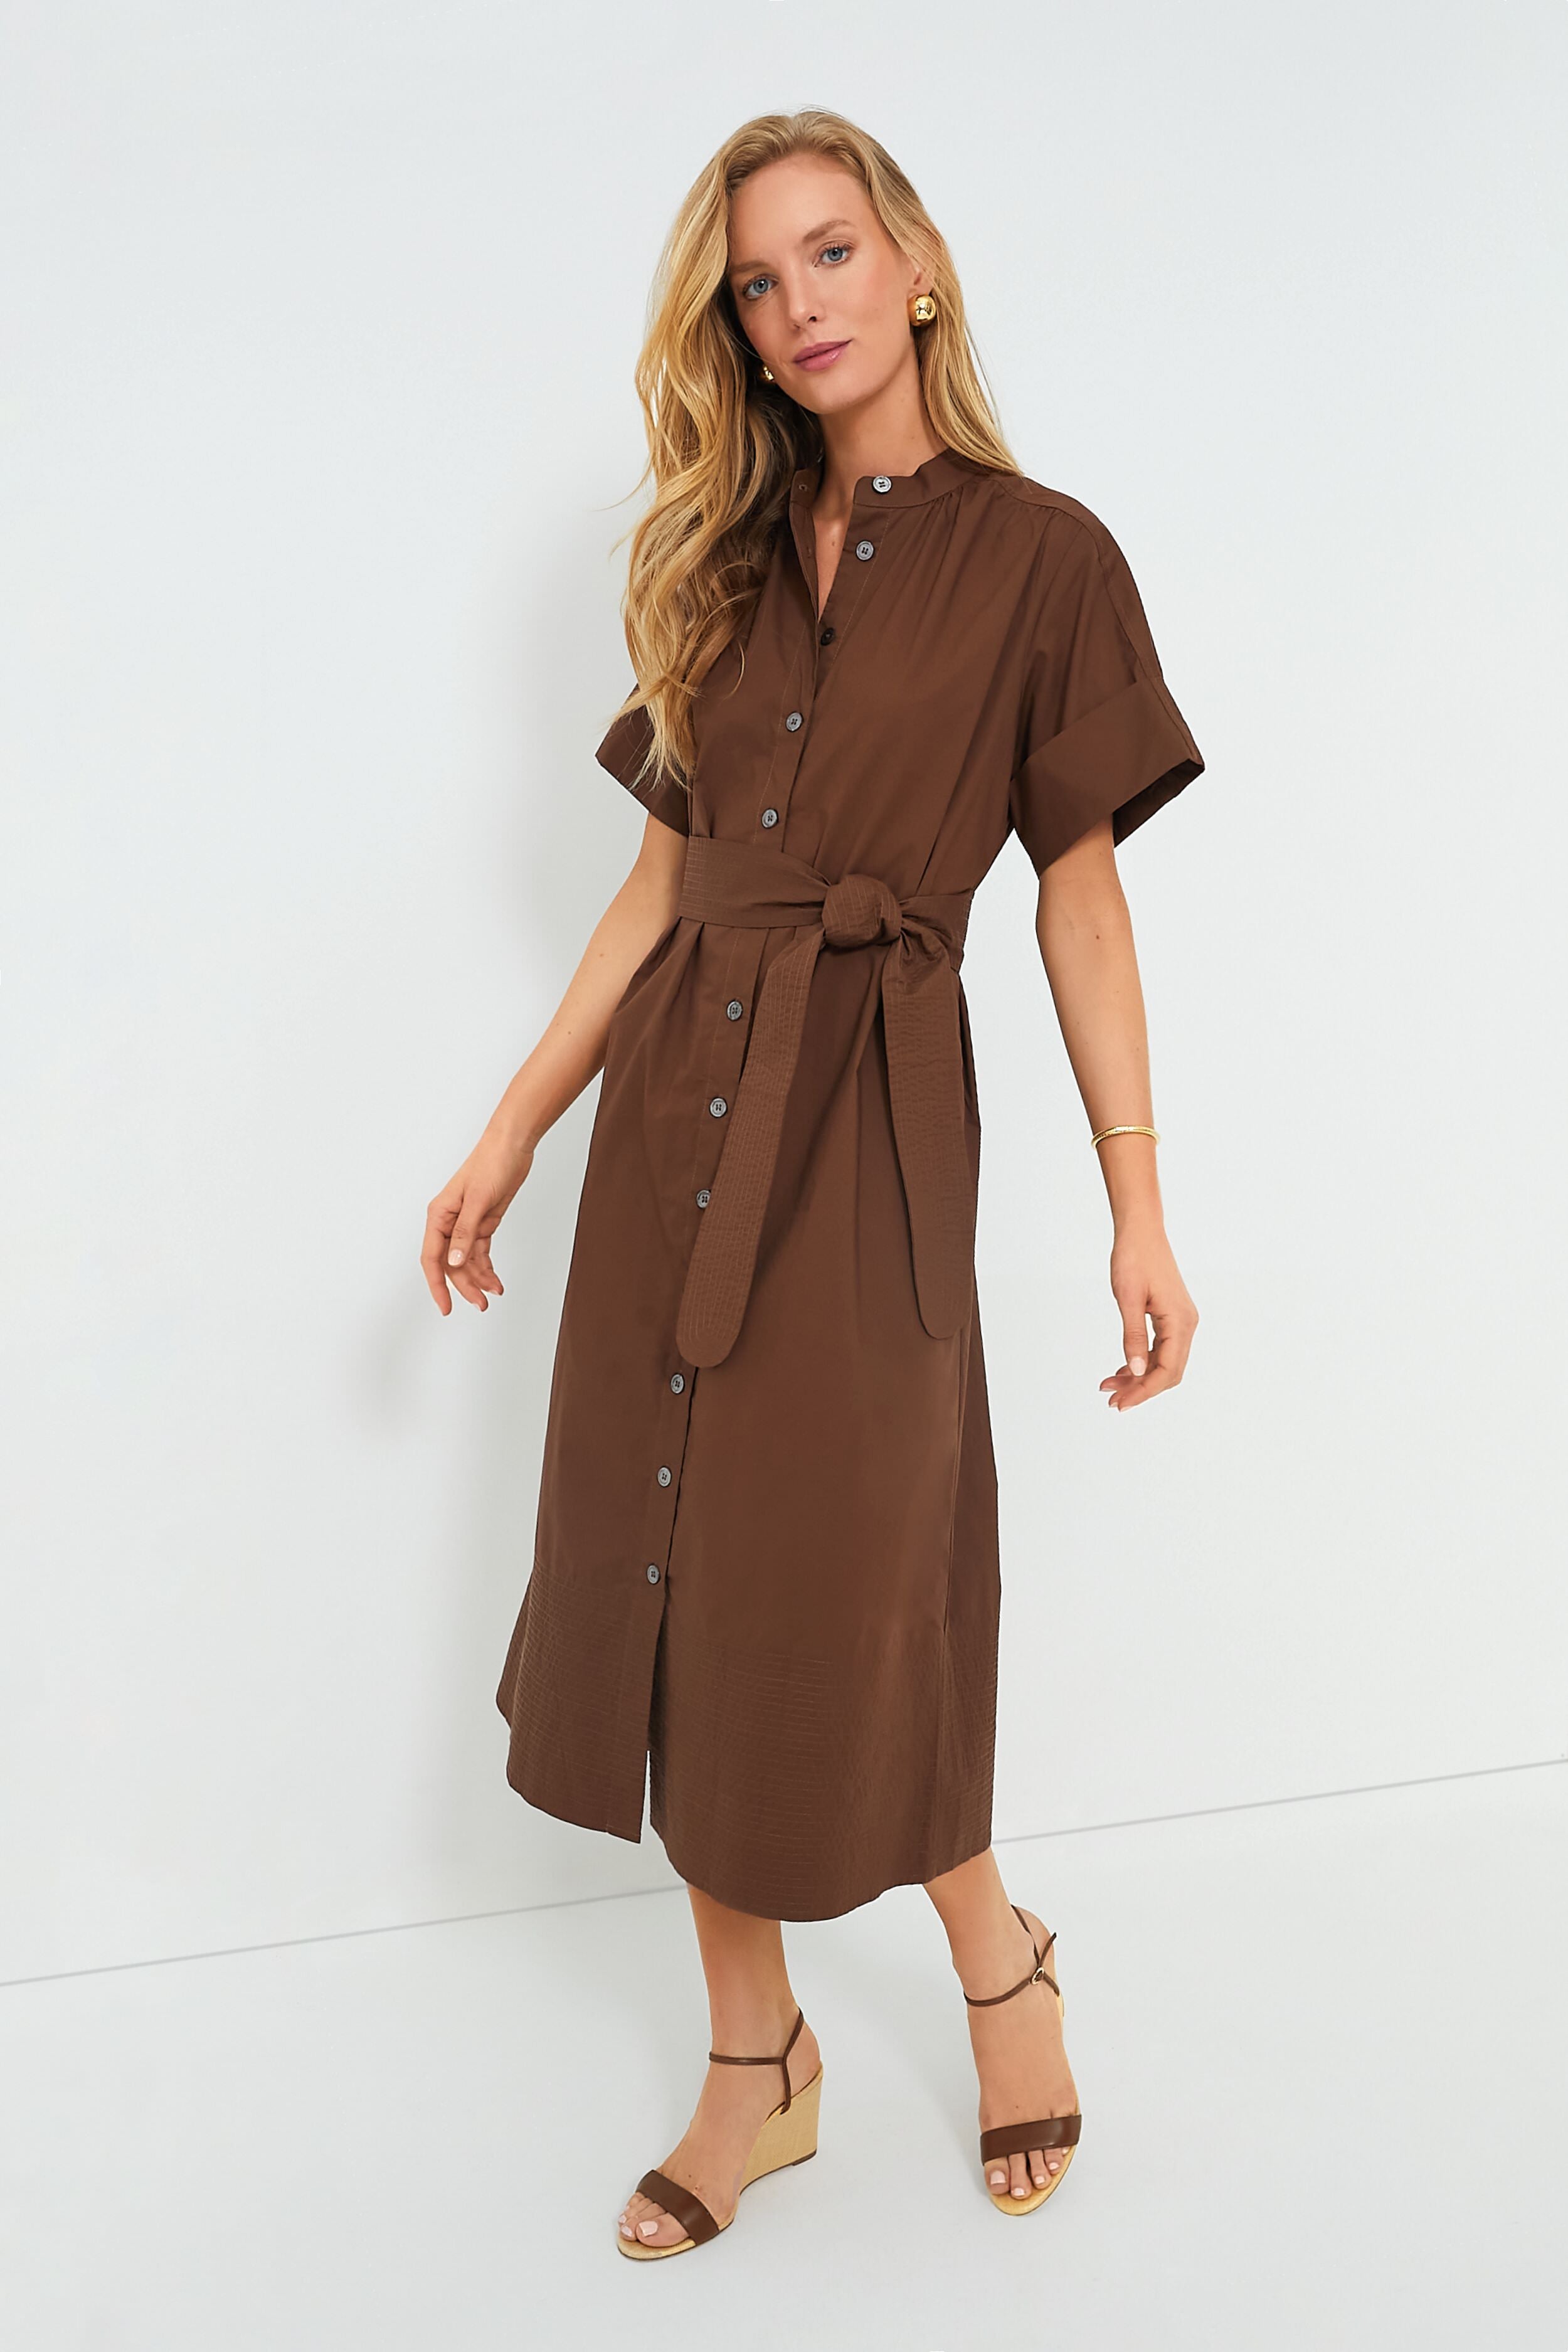 Chicos Travelers Brown Sleeveless Dress Womens Size 0… - Gem